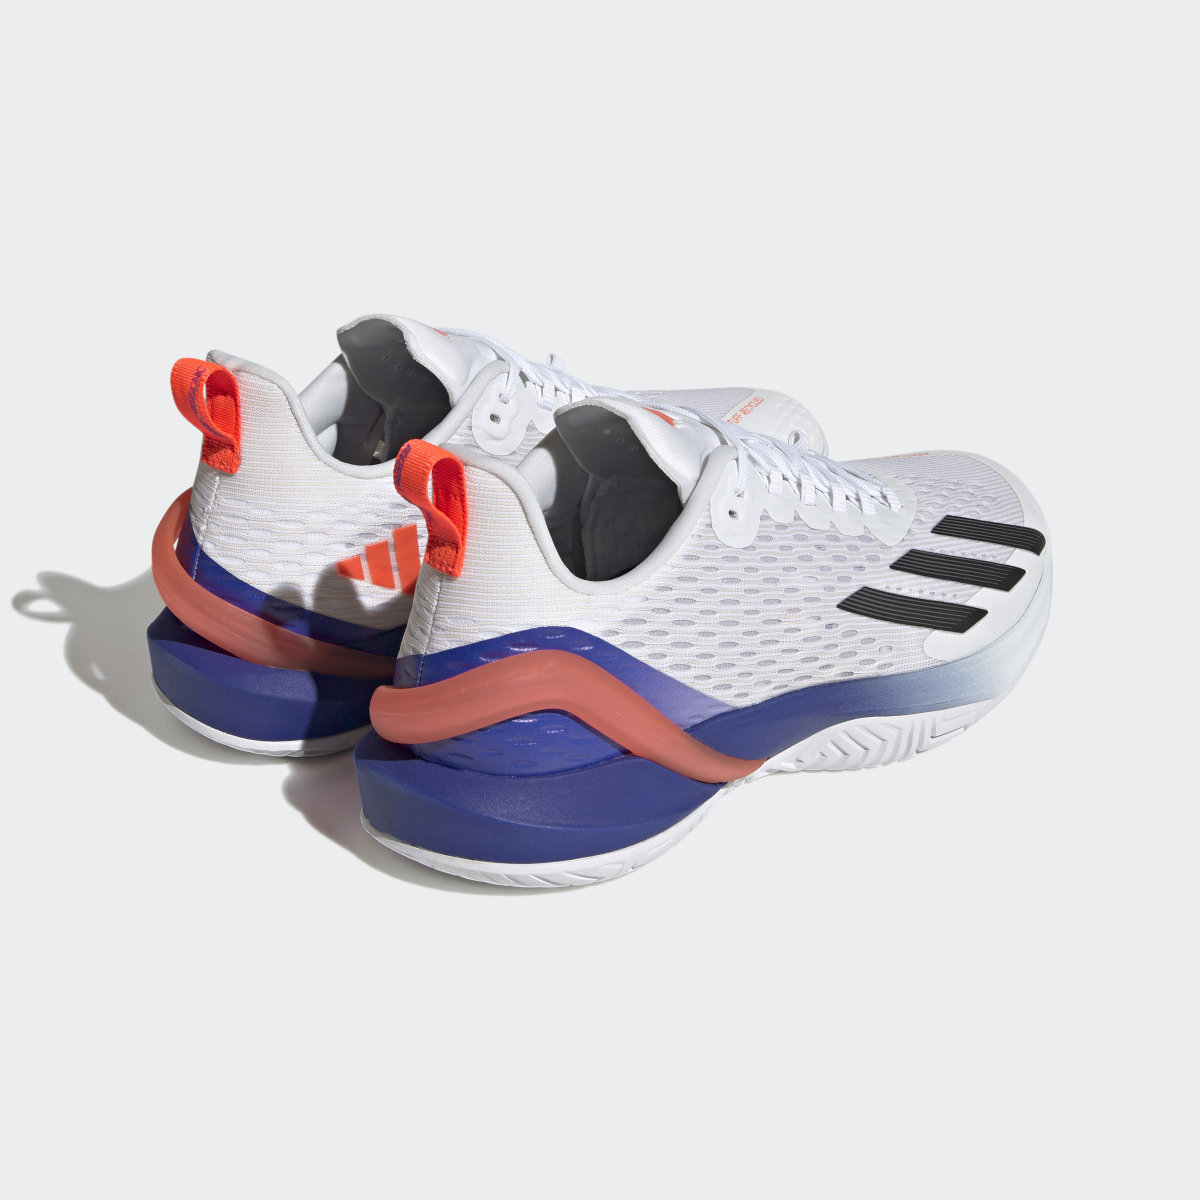 Adidas adizero Cybersonic Tenis Ayakkabısı. 13